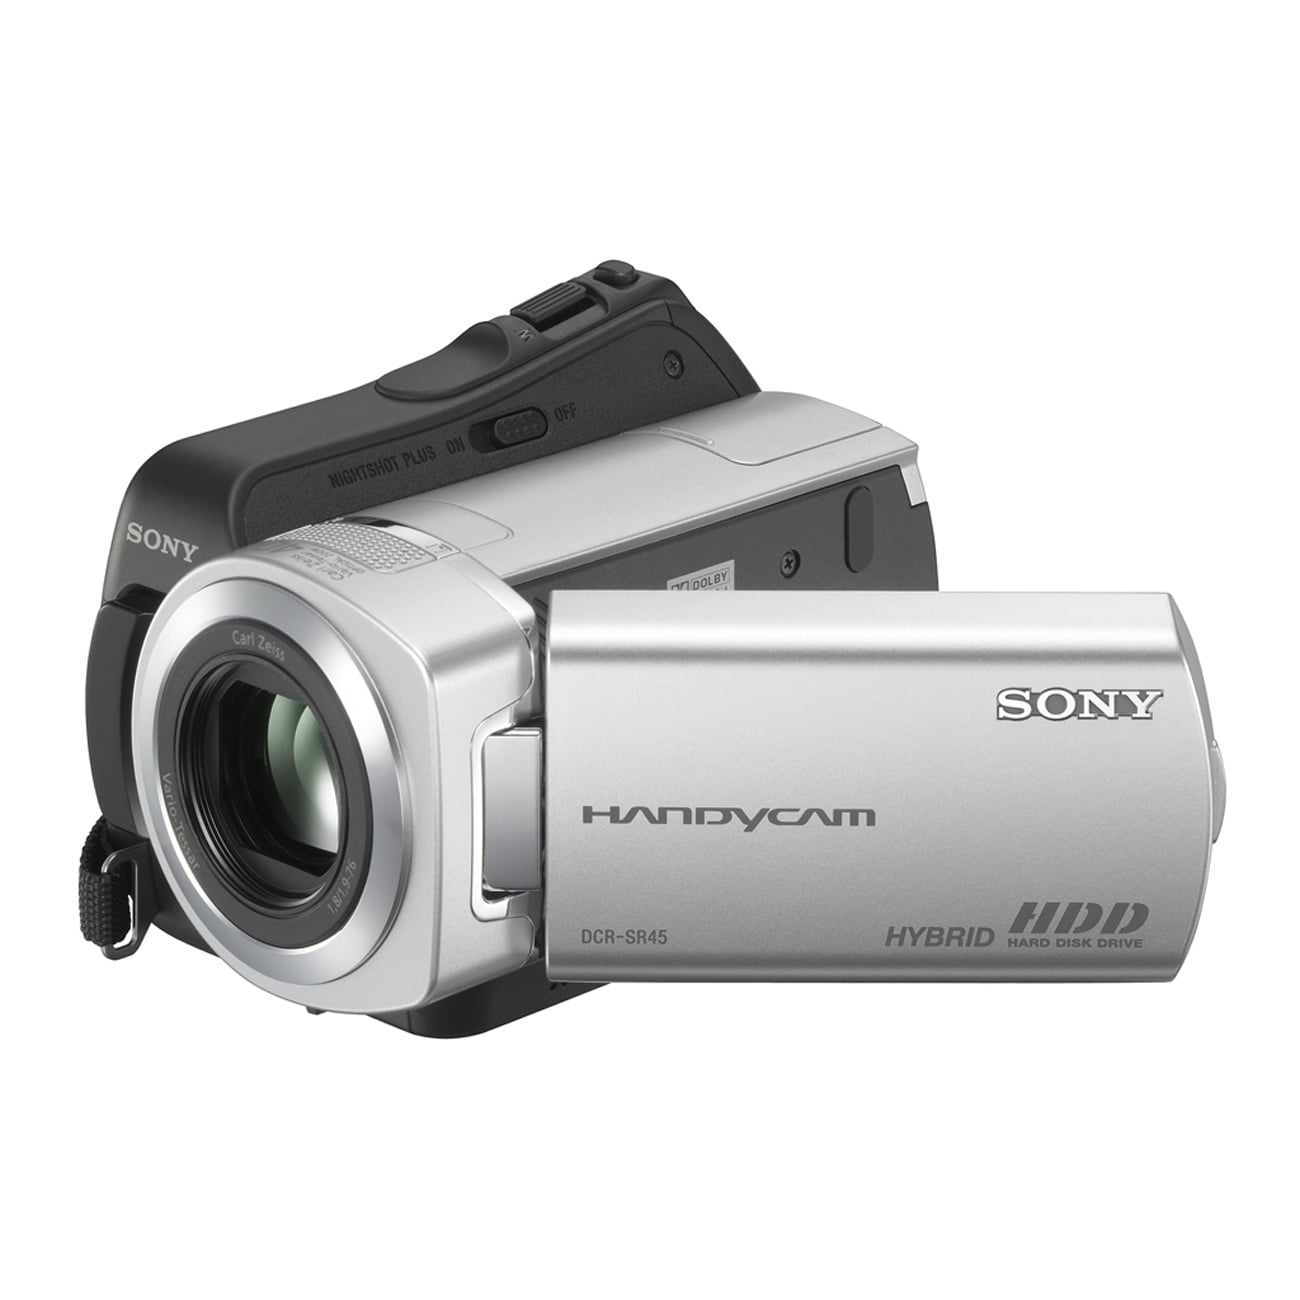 Refurbished Sony DCR-SR45 Handycam GB Camcorder - Black/Silver - Walmart.com